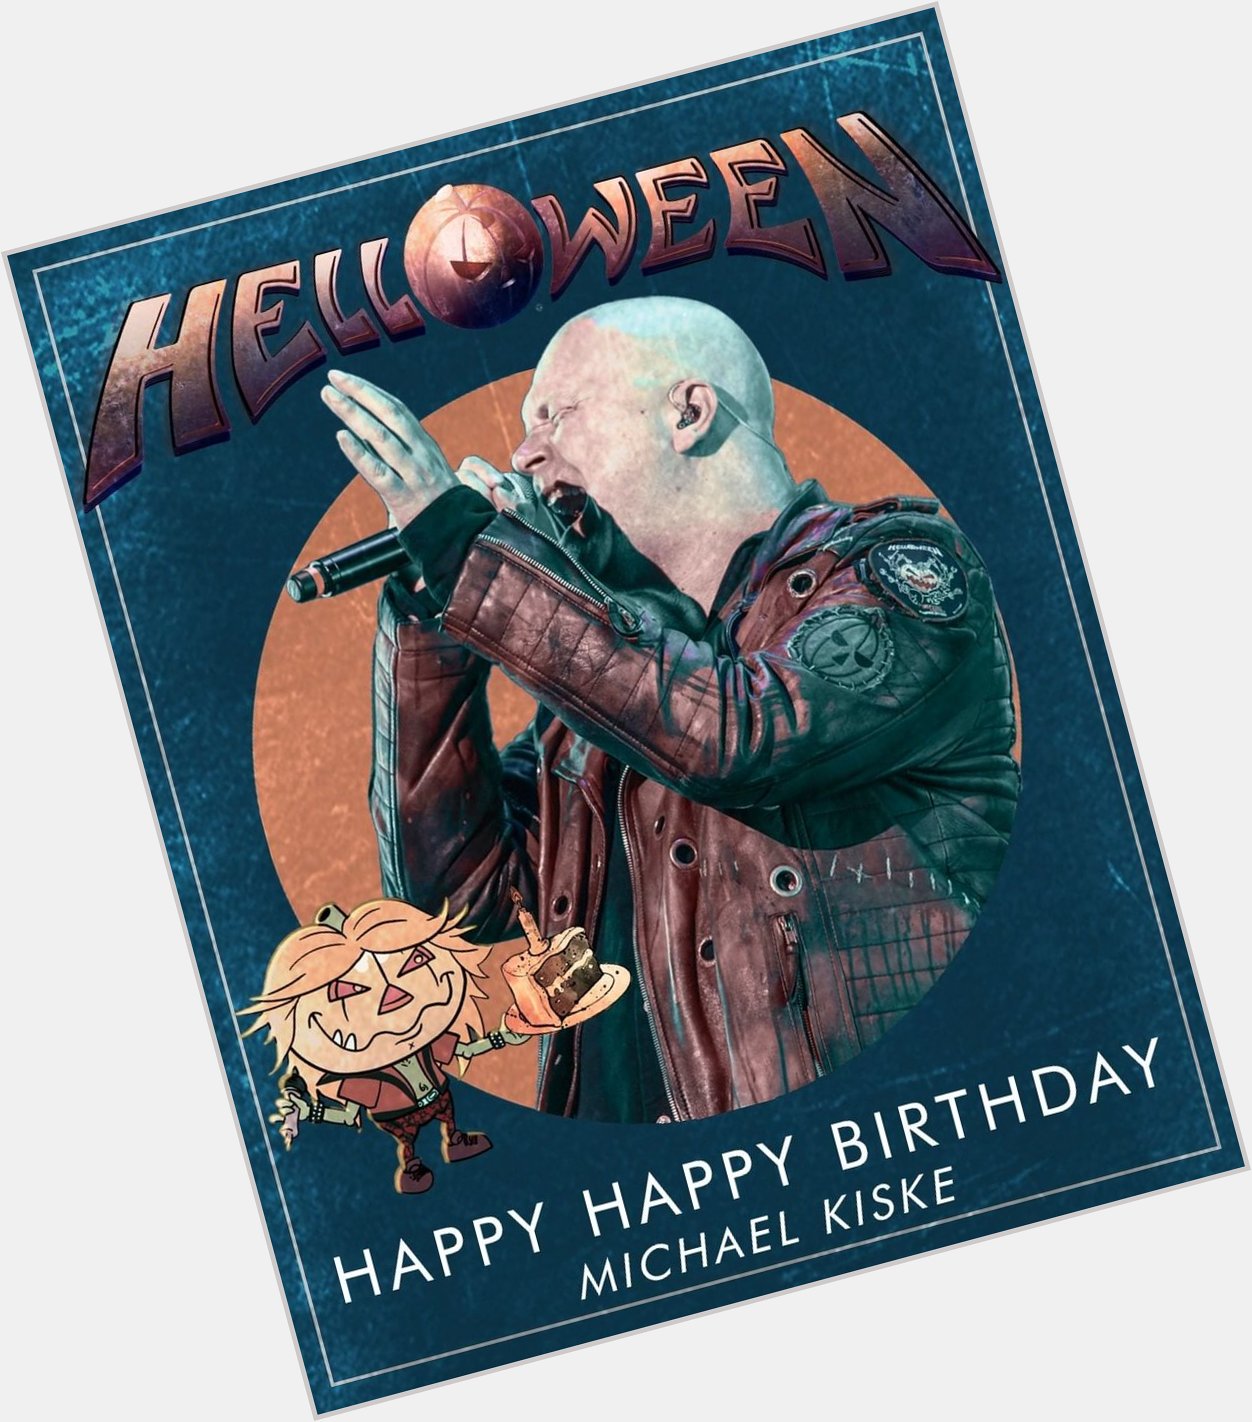 Happy 54 birthday to the Helloween singer Michael Kiske! 